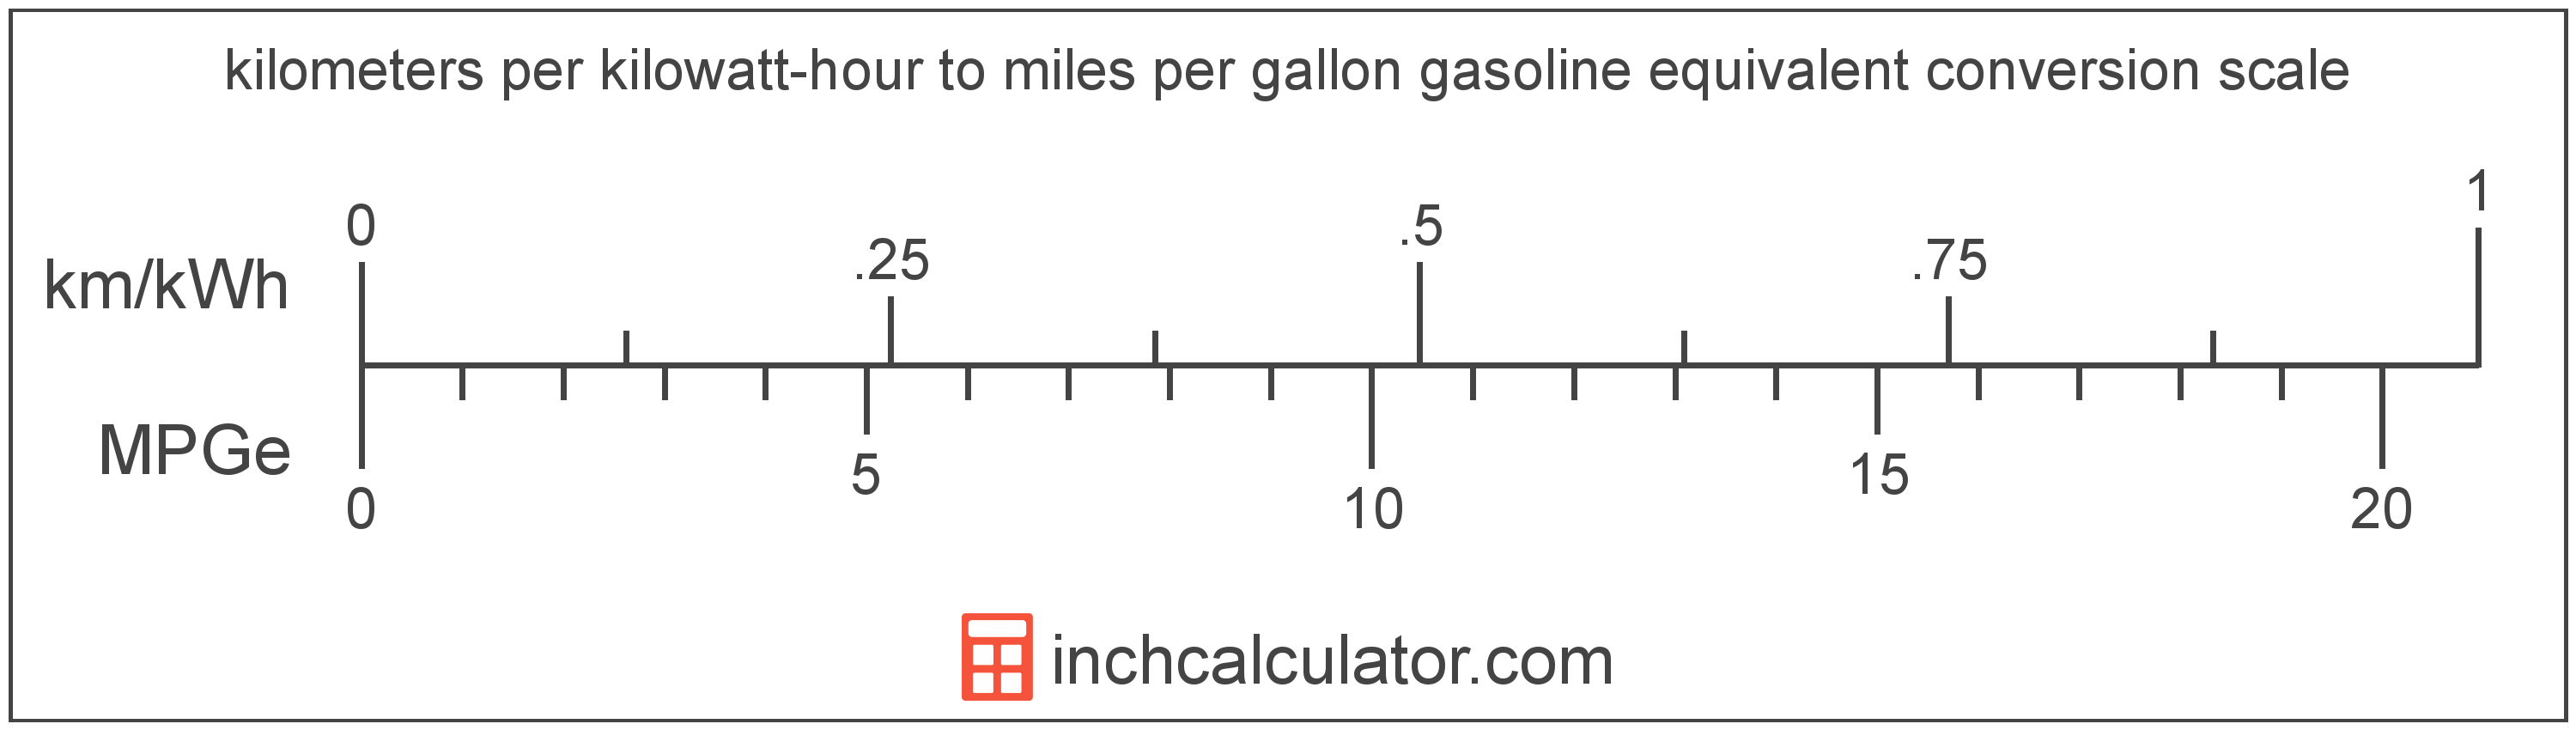 conversion scale showing miles per gallon gasoline equivalent and equivalent kilometers per kilowatt-hour electric car efficiency values